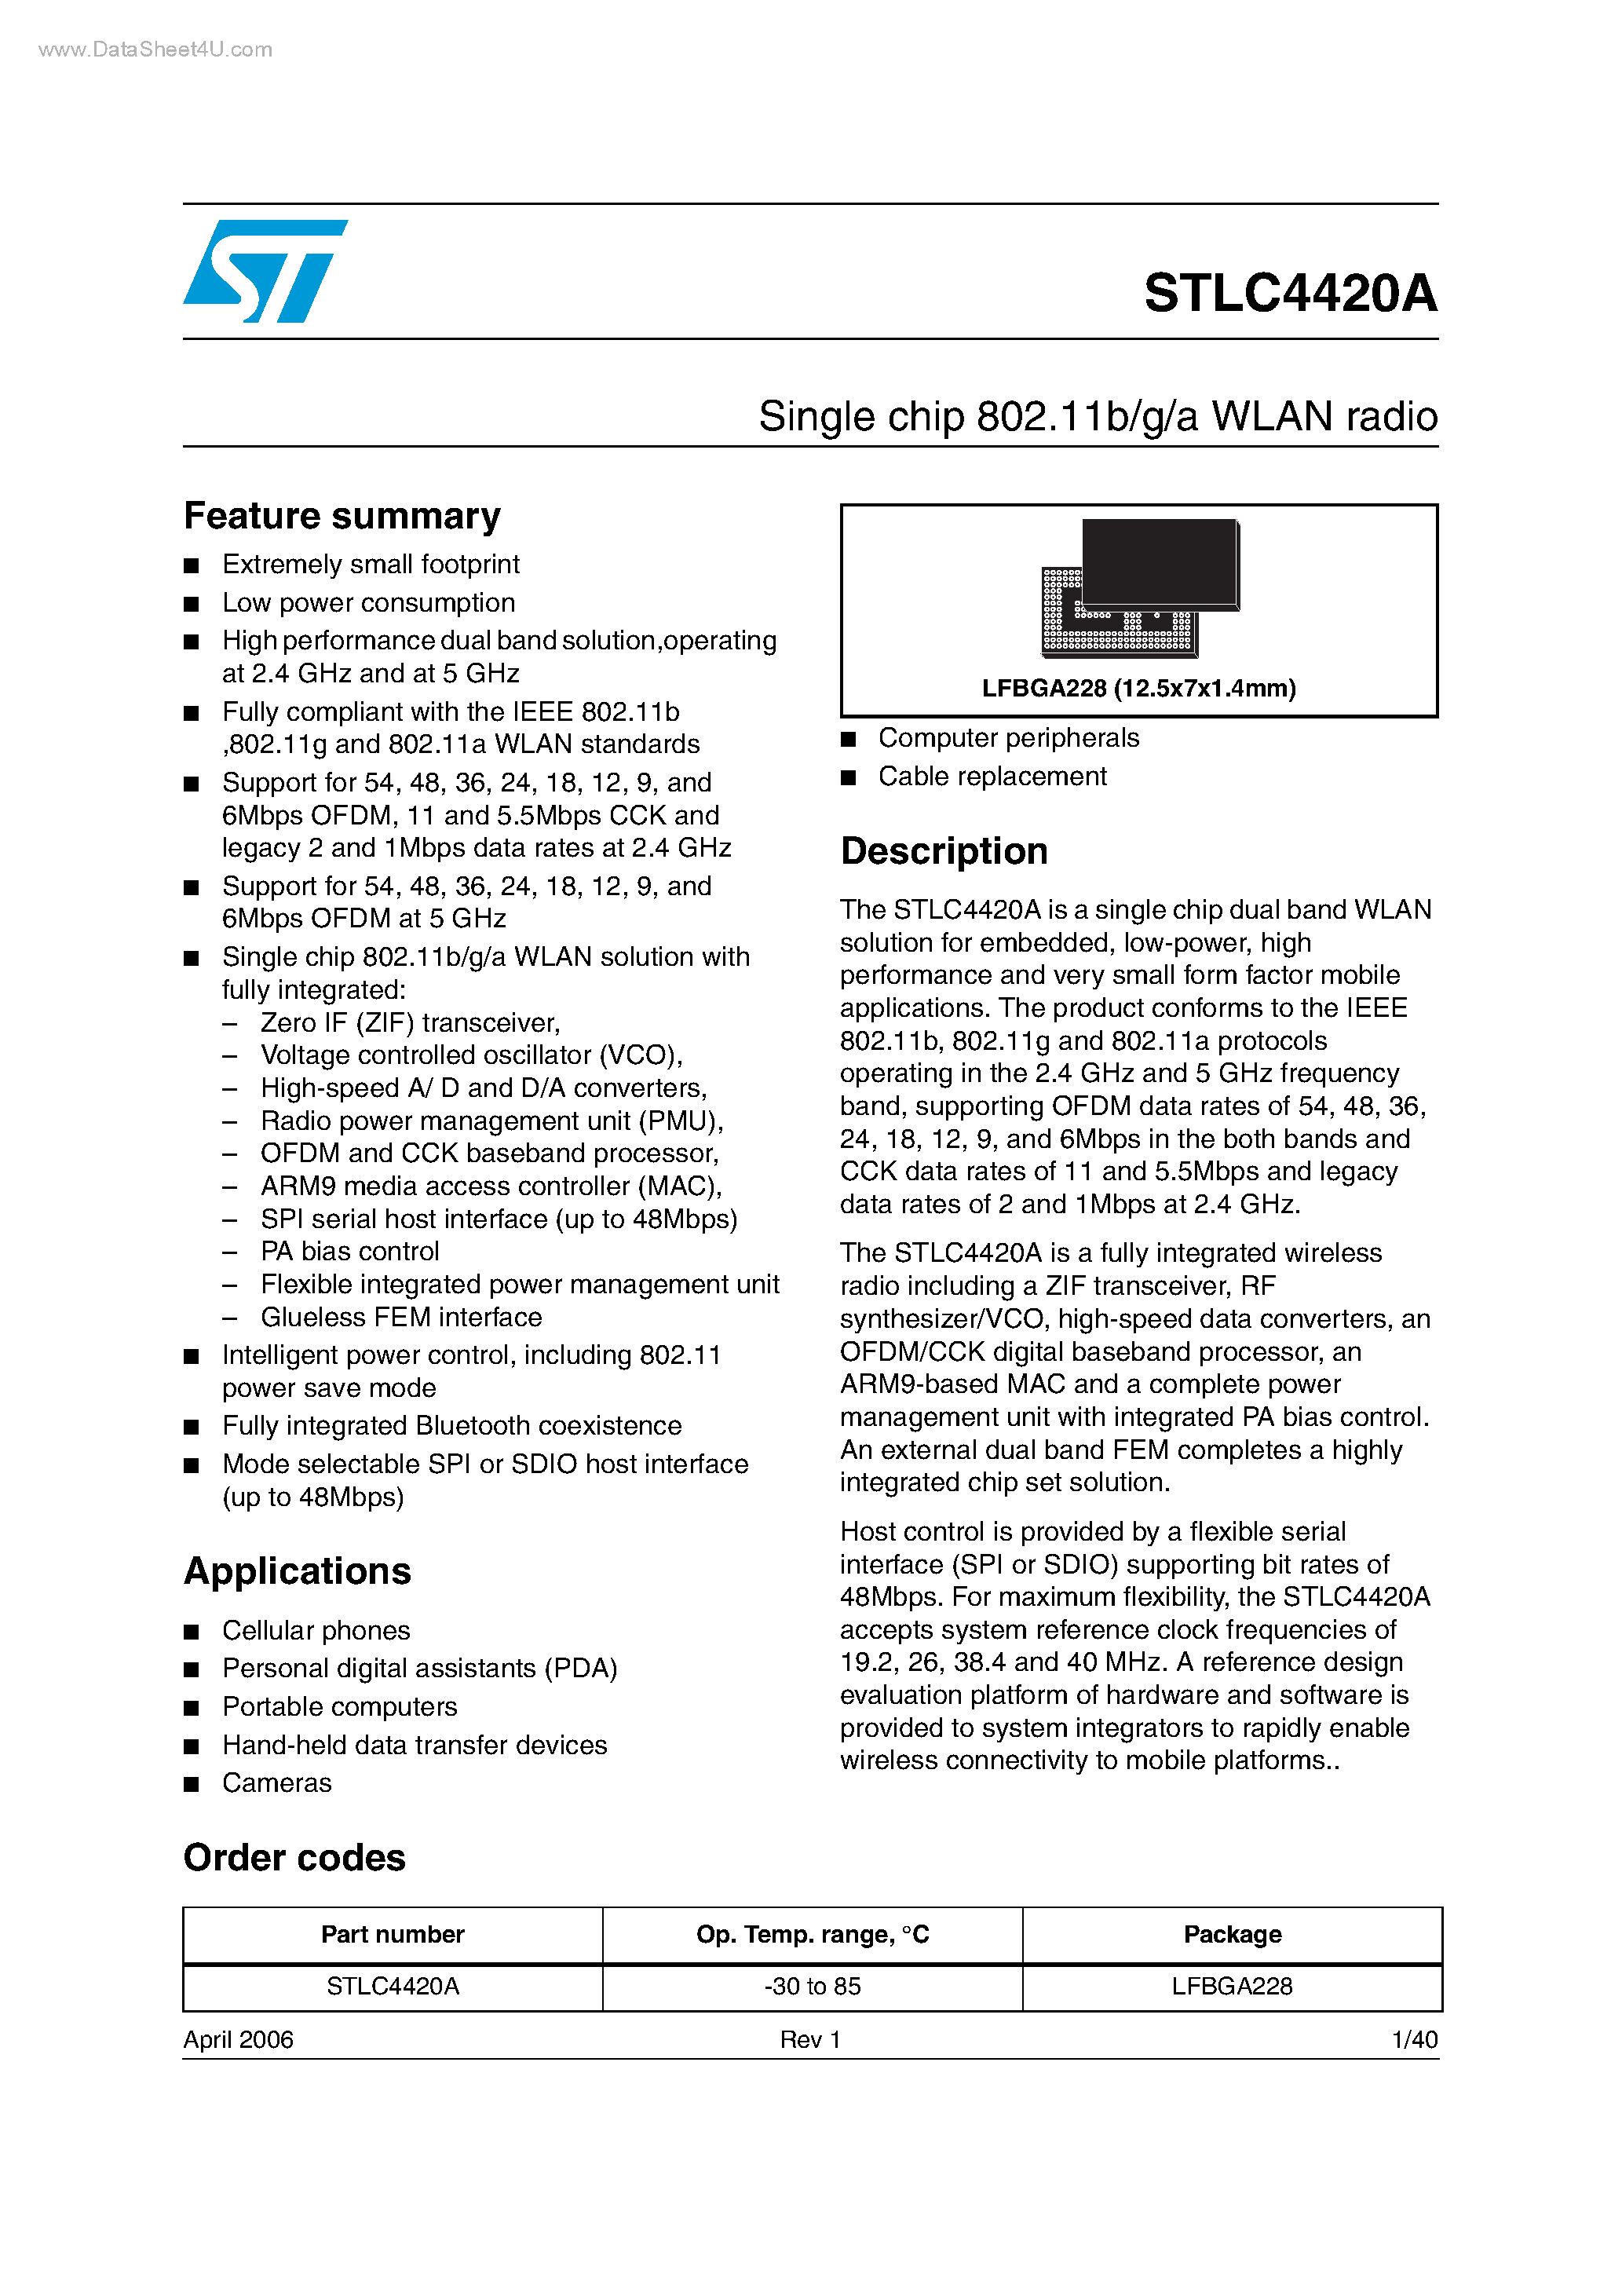 Datasheet STLC4420A - Single chip 802.11b/g/a WLAN radio page 1